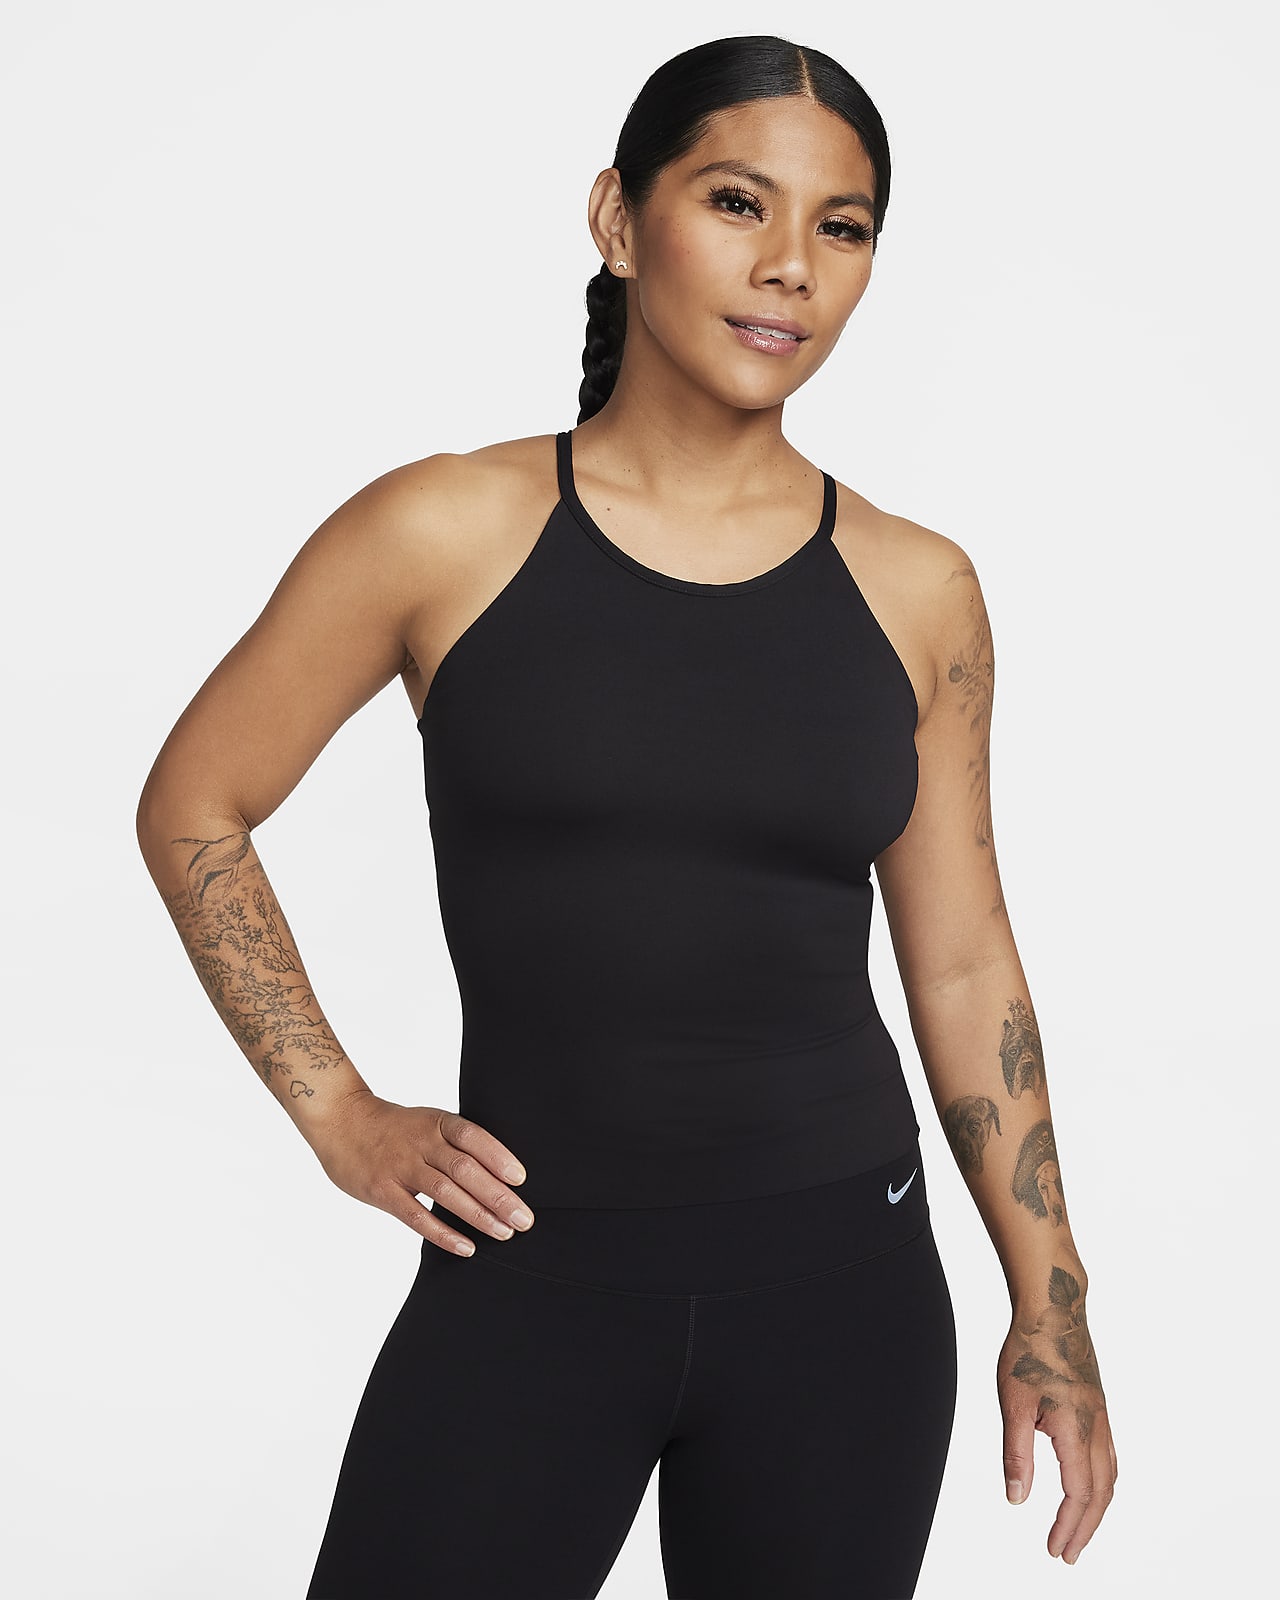 Women's Nike dri fit built-in bra tank top Small Black Racerback